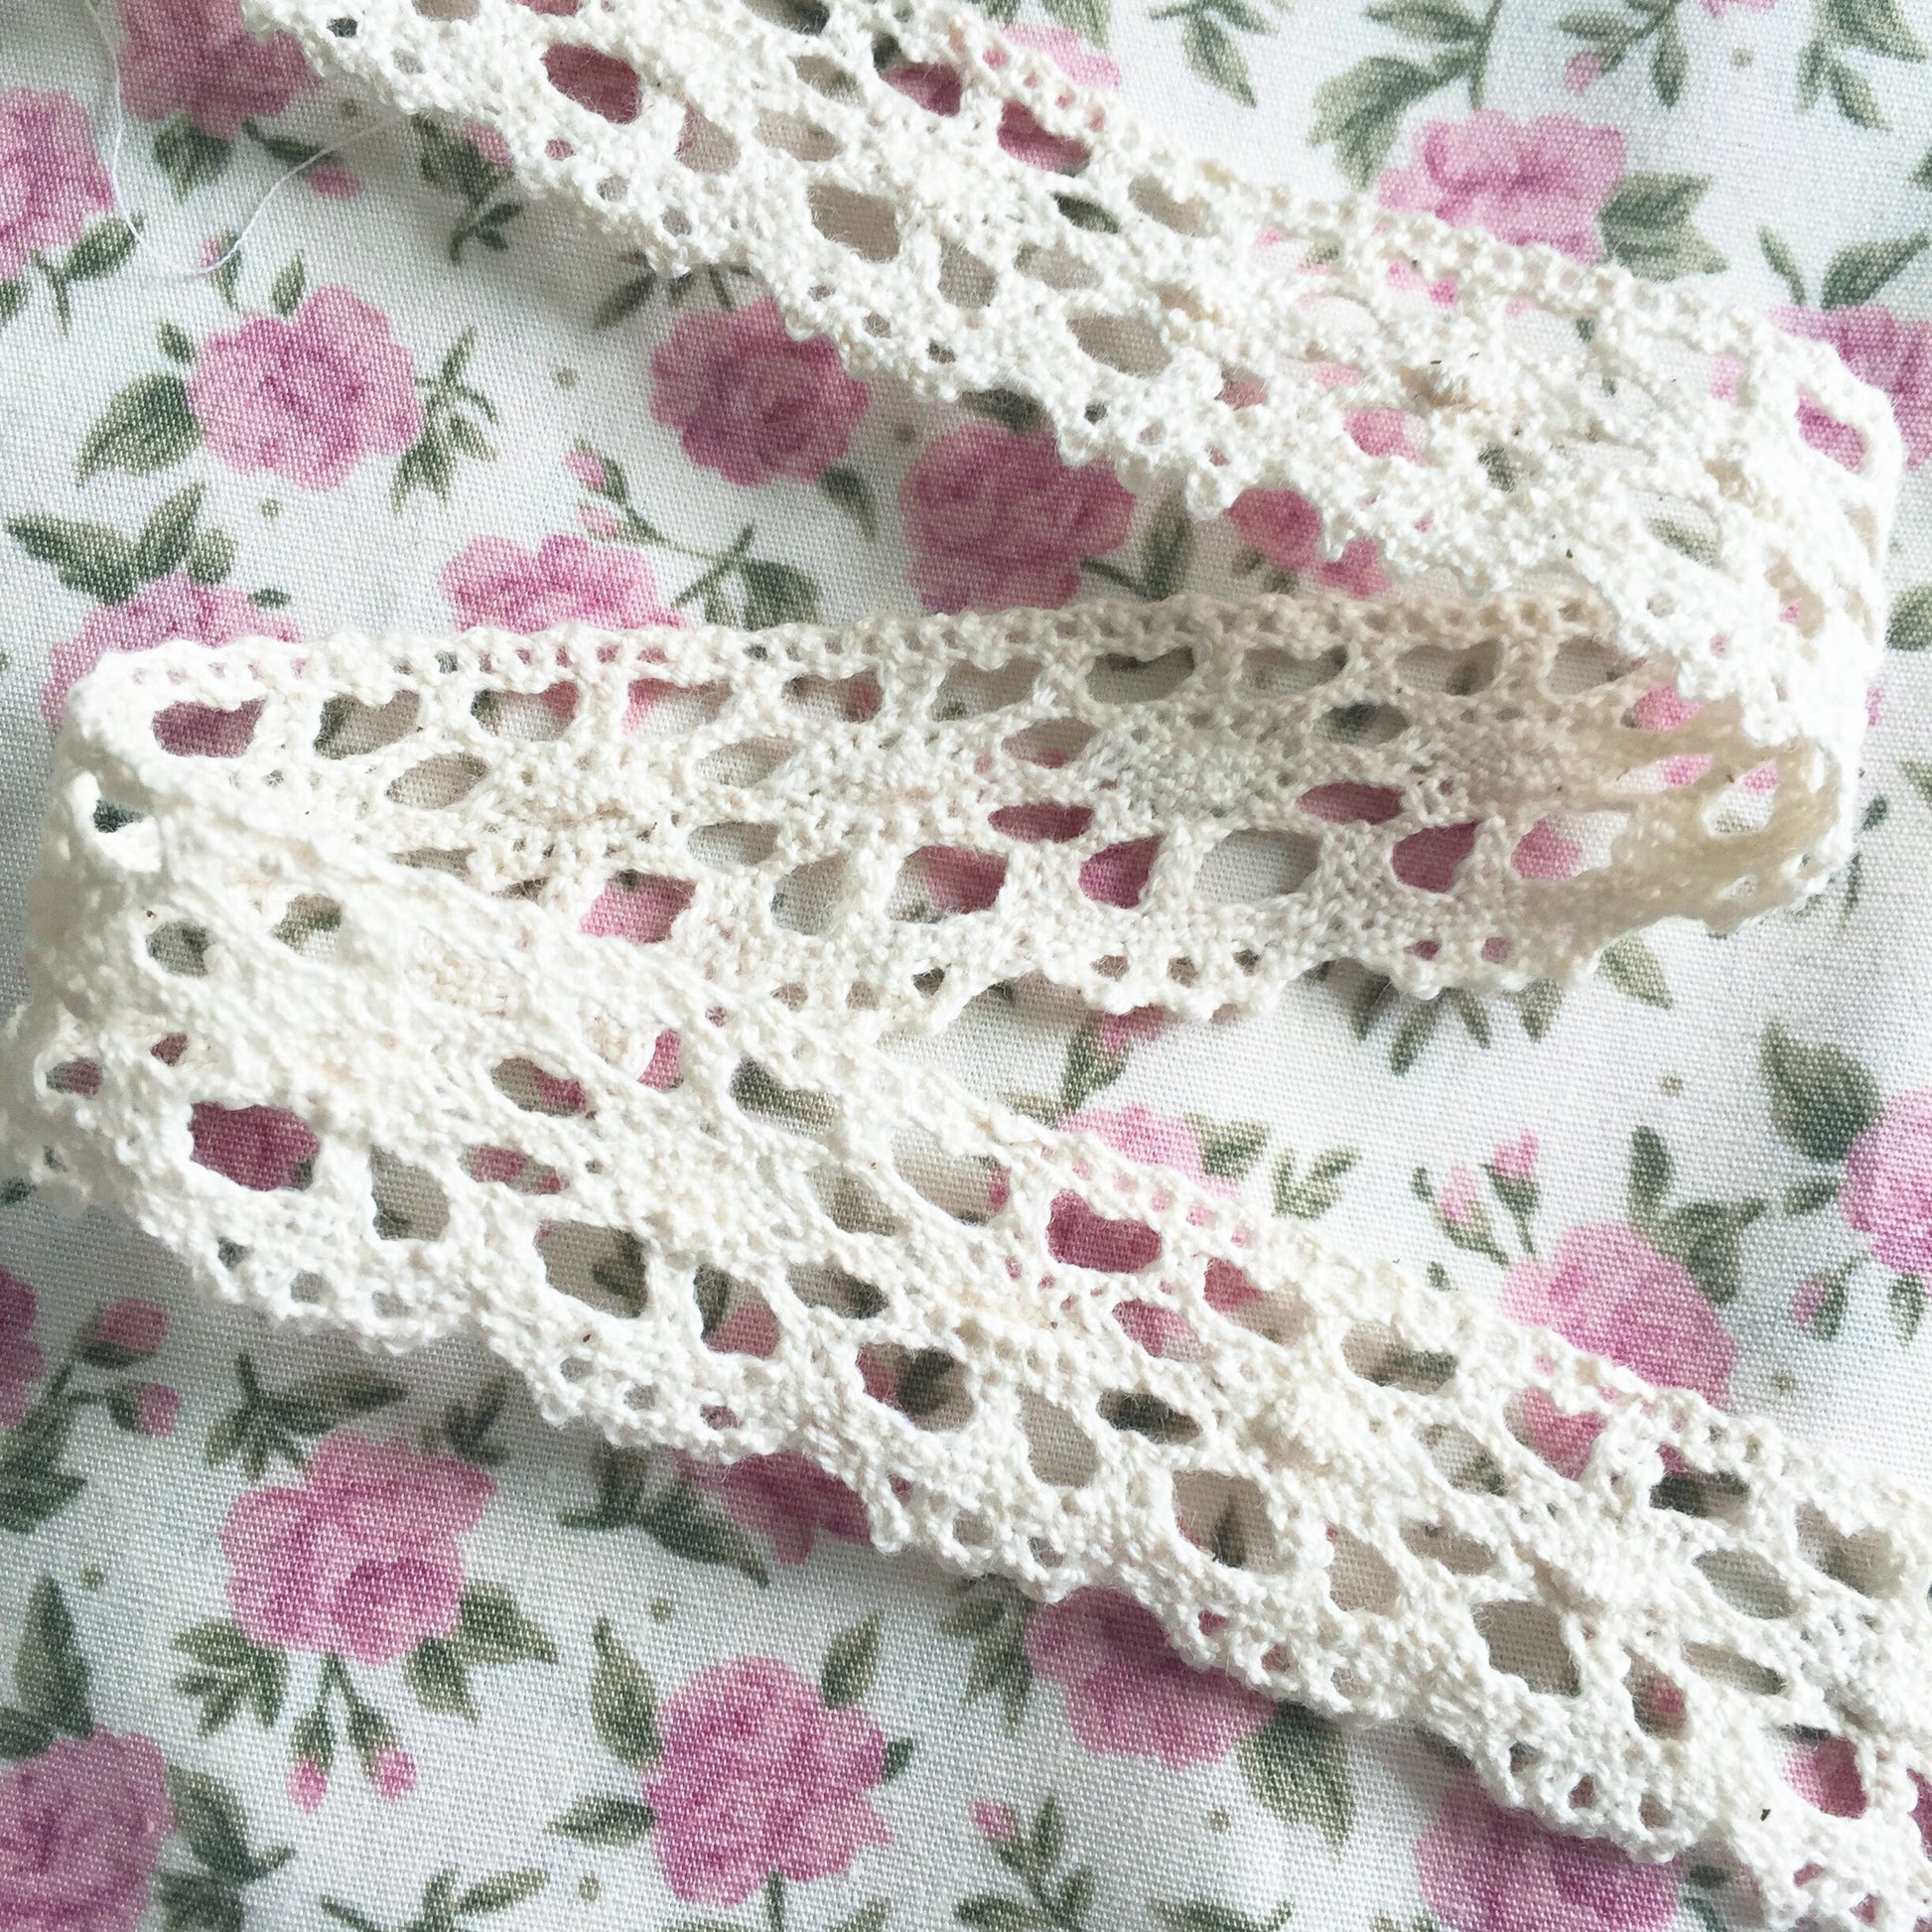 20mm 2cm Pretty Cream Lace Cotton Crochet Ribbon Trim | 1m - 20m Full Roll | Wedding Craft Sewing - SweetpeaStore